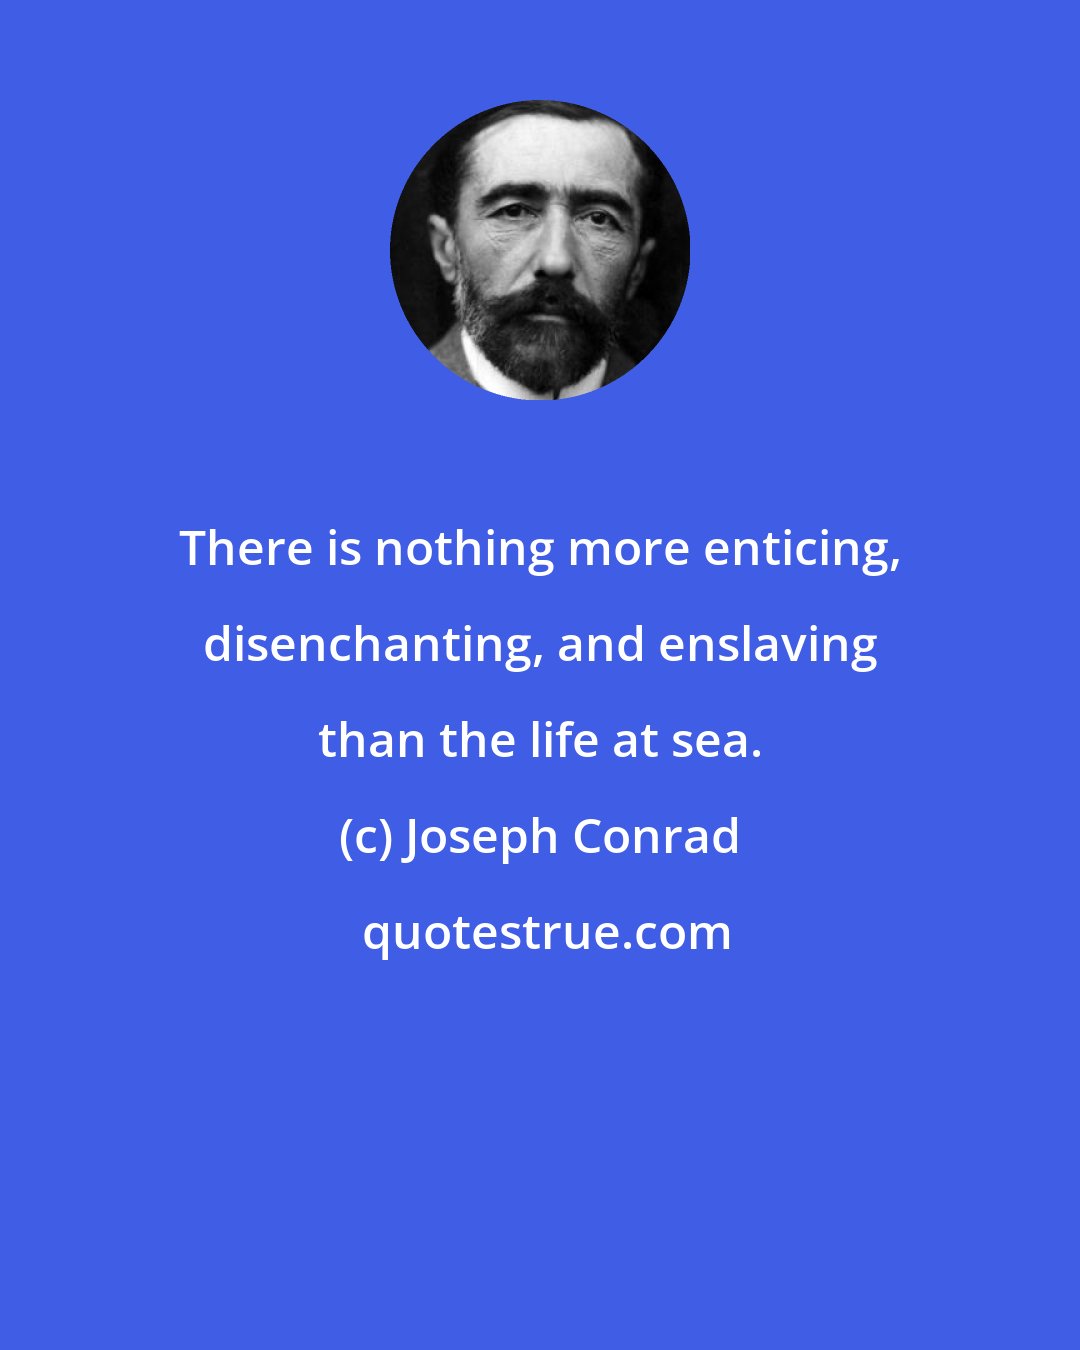 Joseph Conrad: There is nothing more enticing, disenchanting, and enslaving than the life at sea.